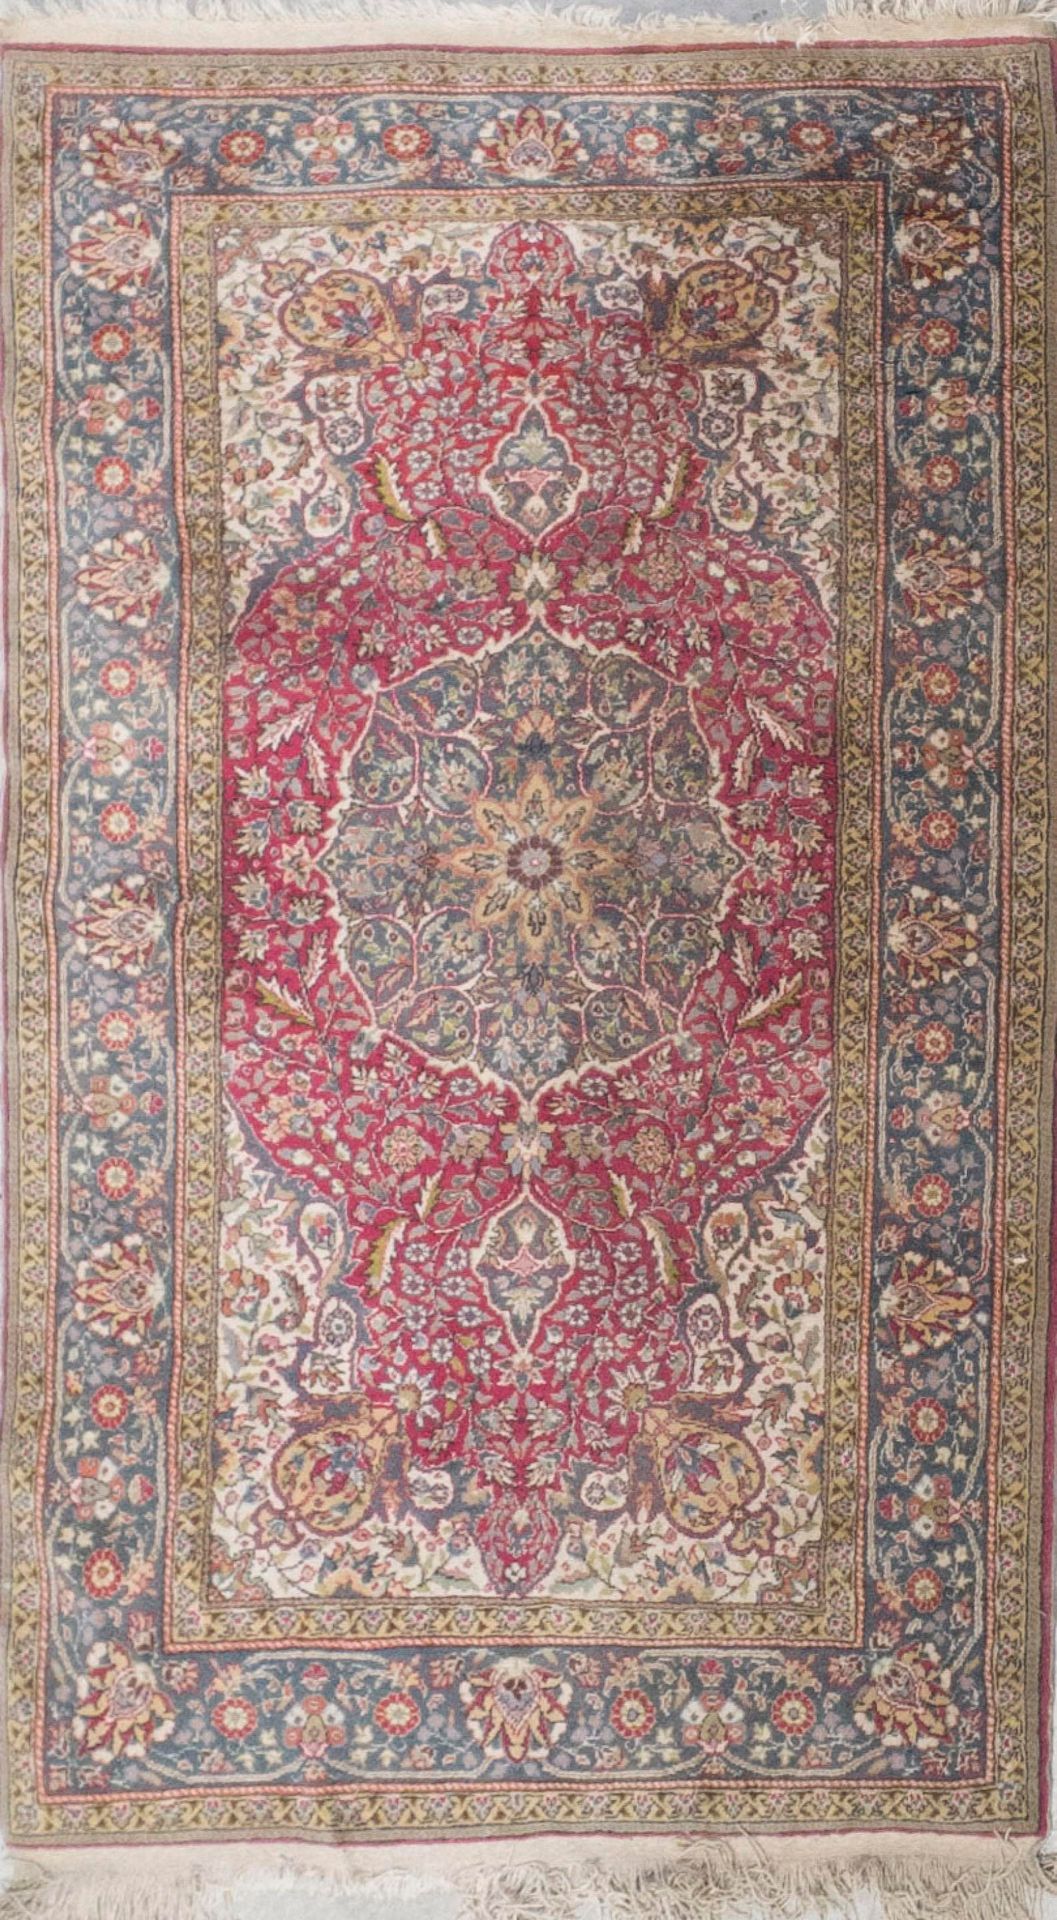 Null 多色羊毛地毯，田野上装饰着红底的玫瑰花，边框装饰着风格化的花朵

土耳其, 20世纪

194 x 124 cm

磨损的